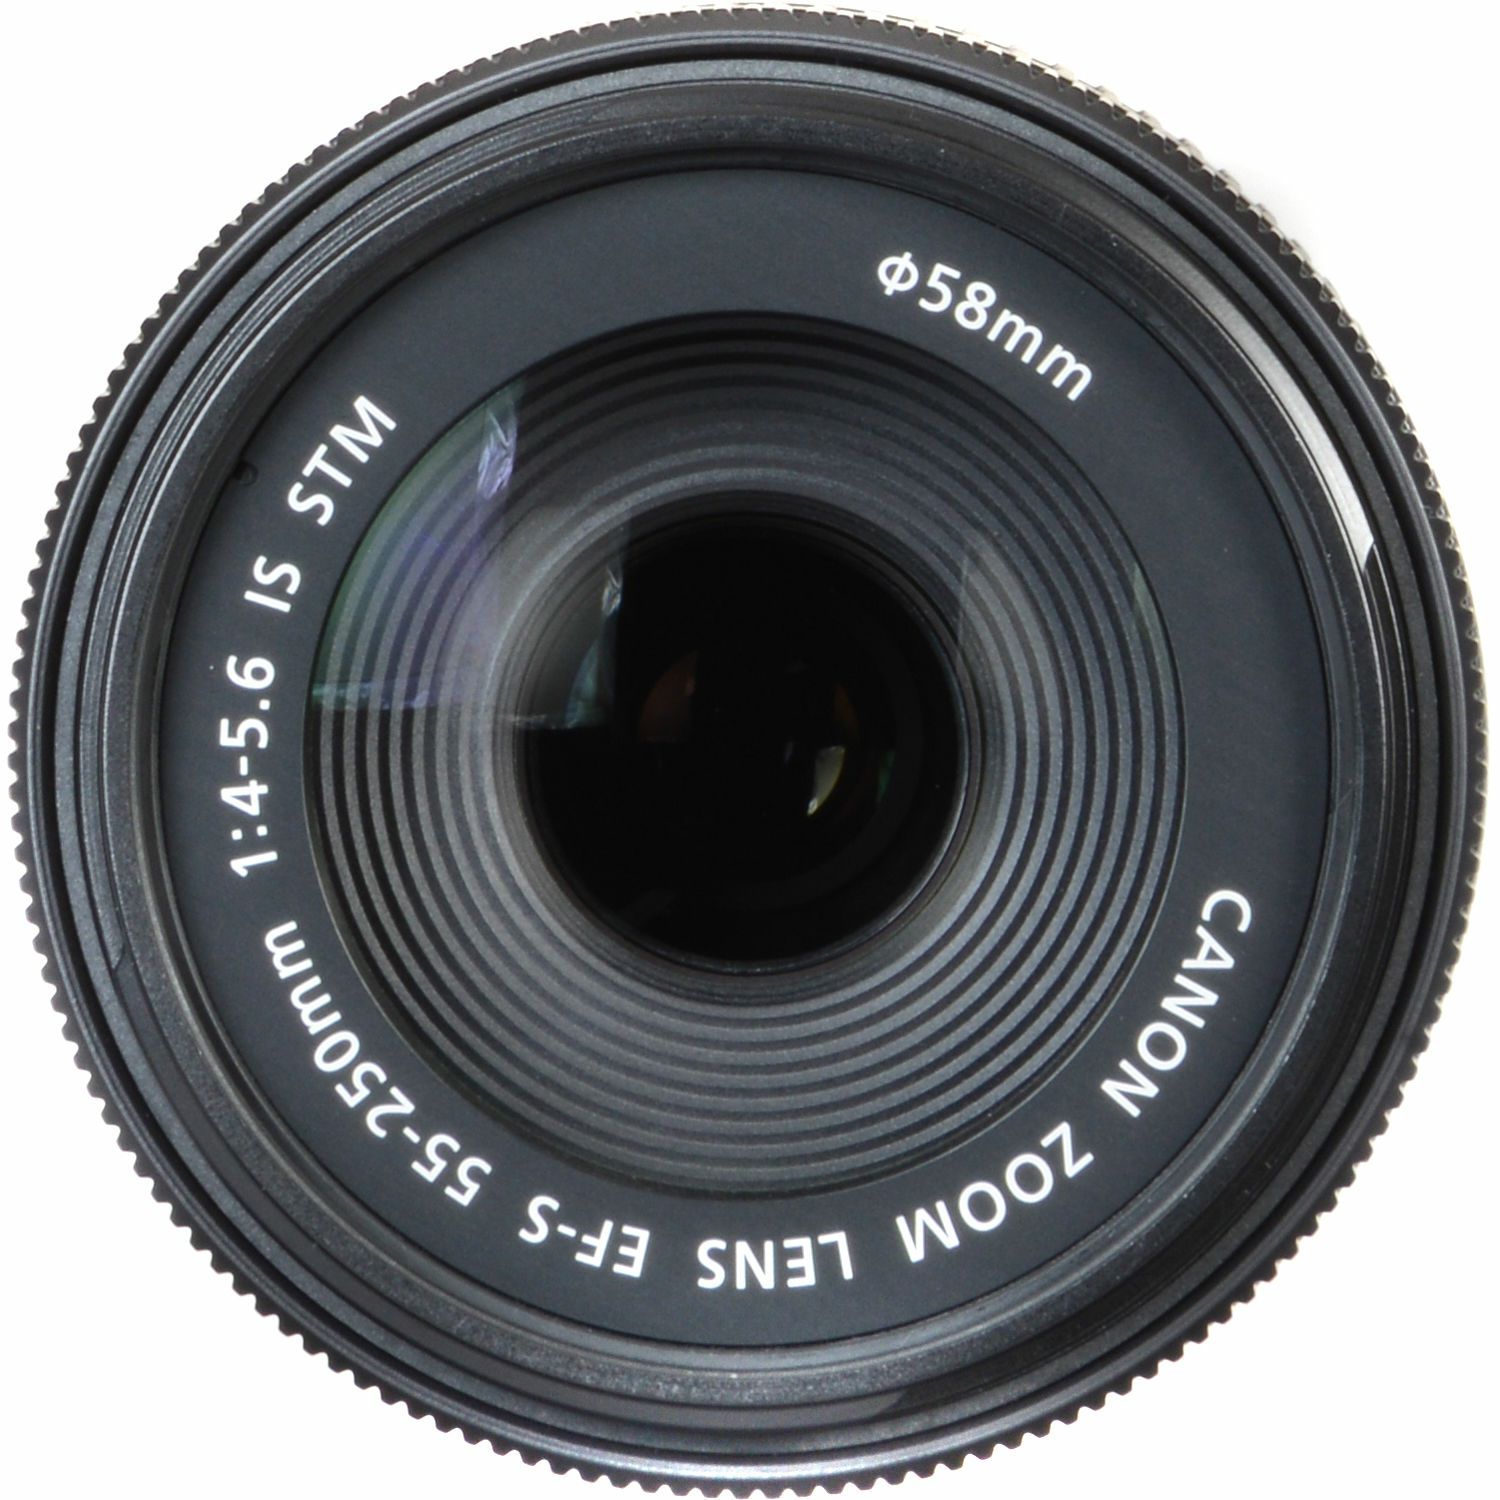 Canon EF-S 55-250 IS STM telefoto objektiv zoom lens 55-250mm 4-5.6 f/4